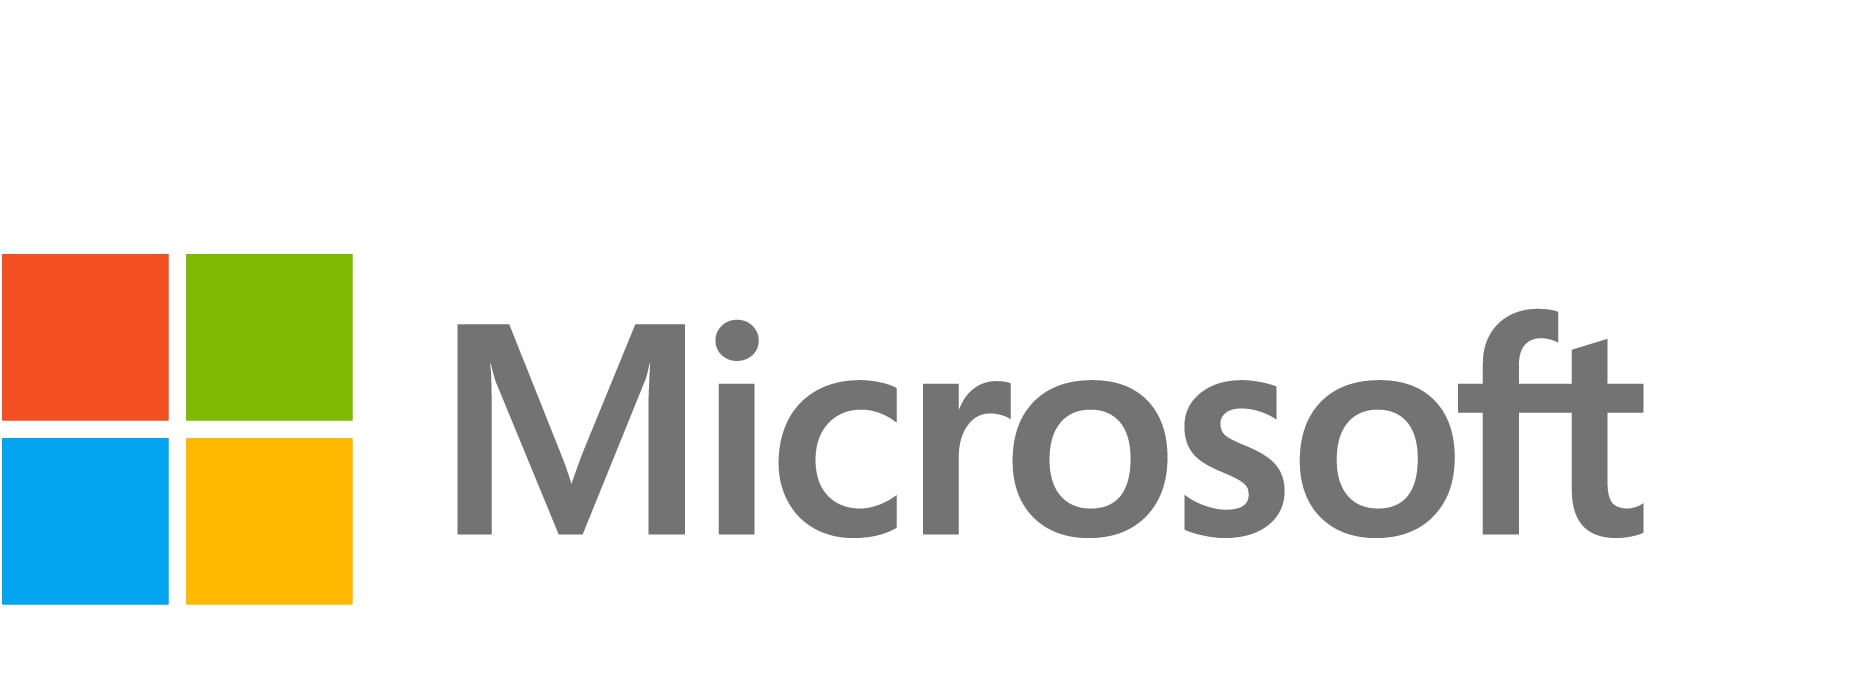 Microsoft Project Professional - license - 1 device